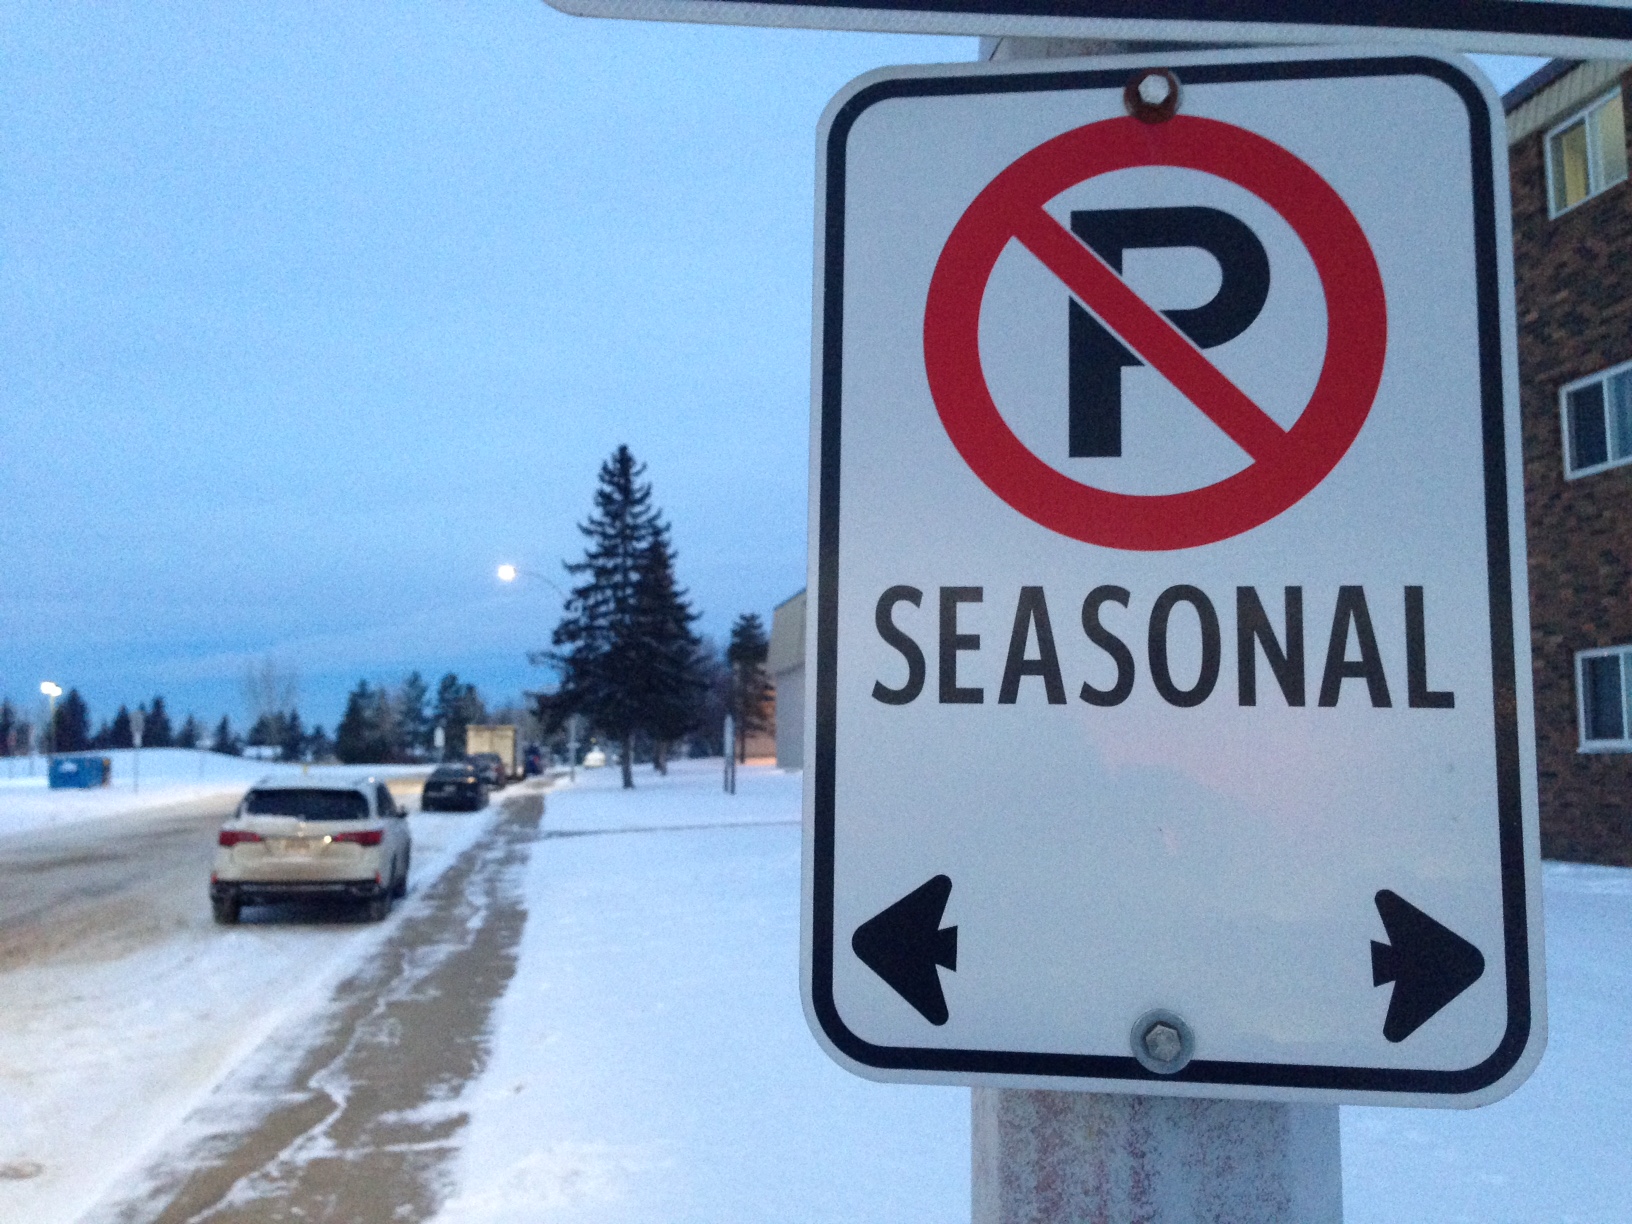 City of Edmonton parking ban ends Saturday